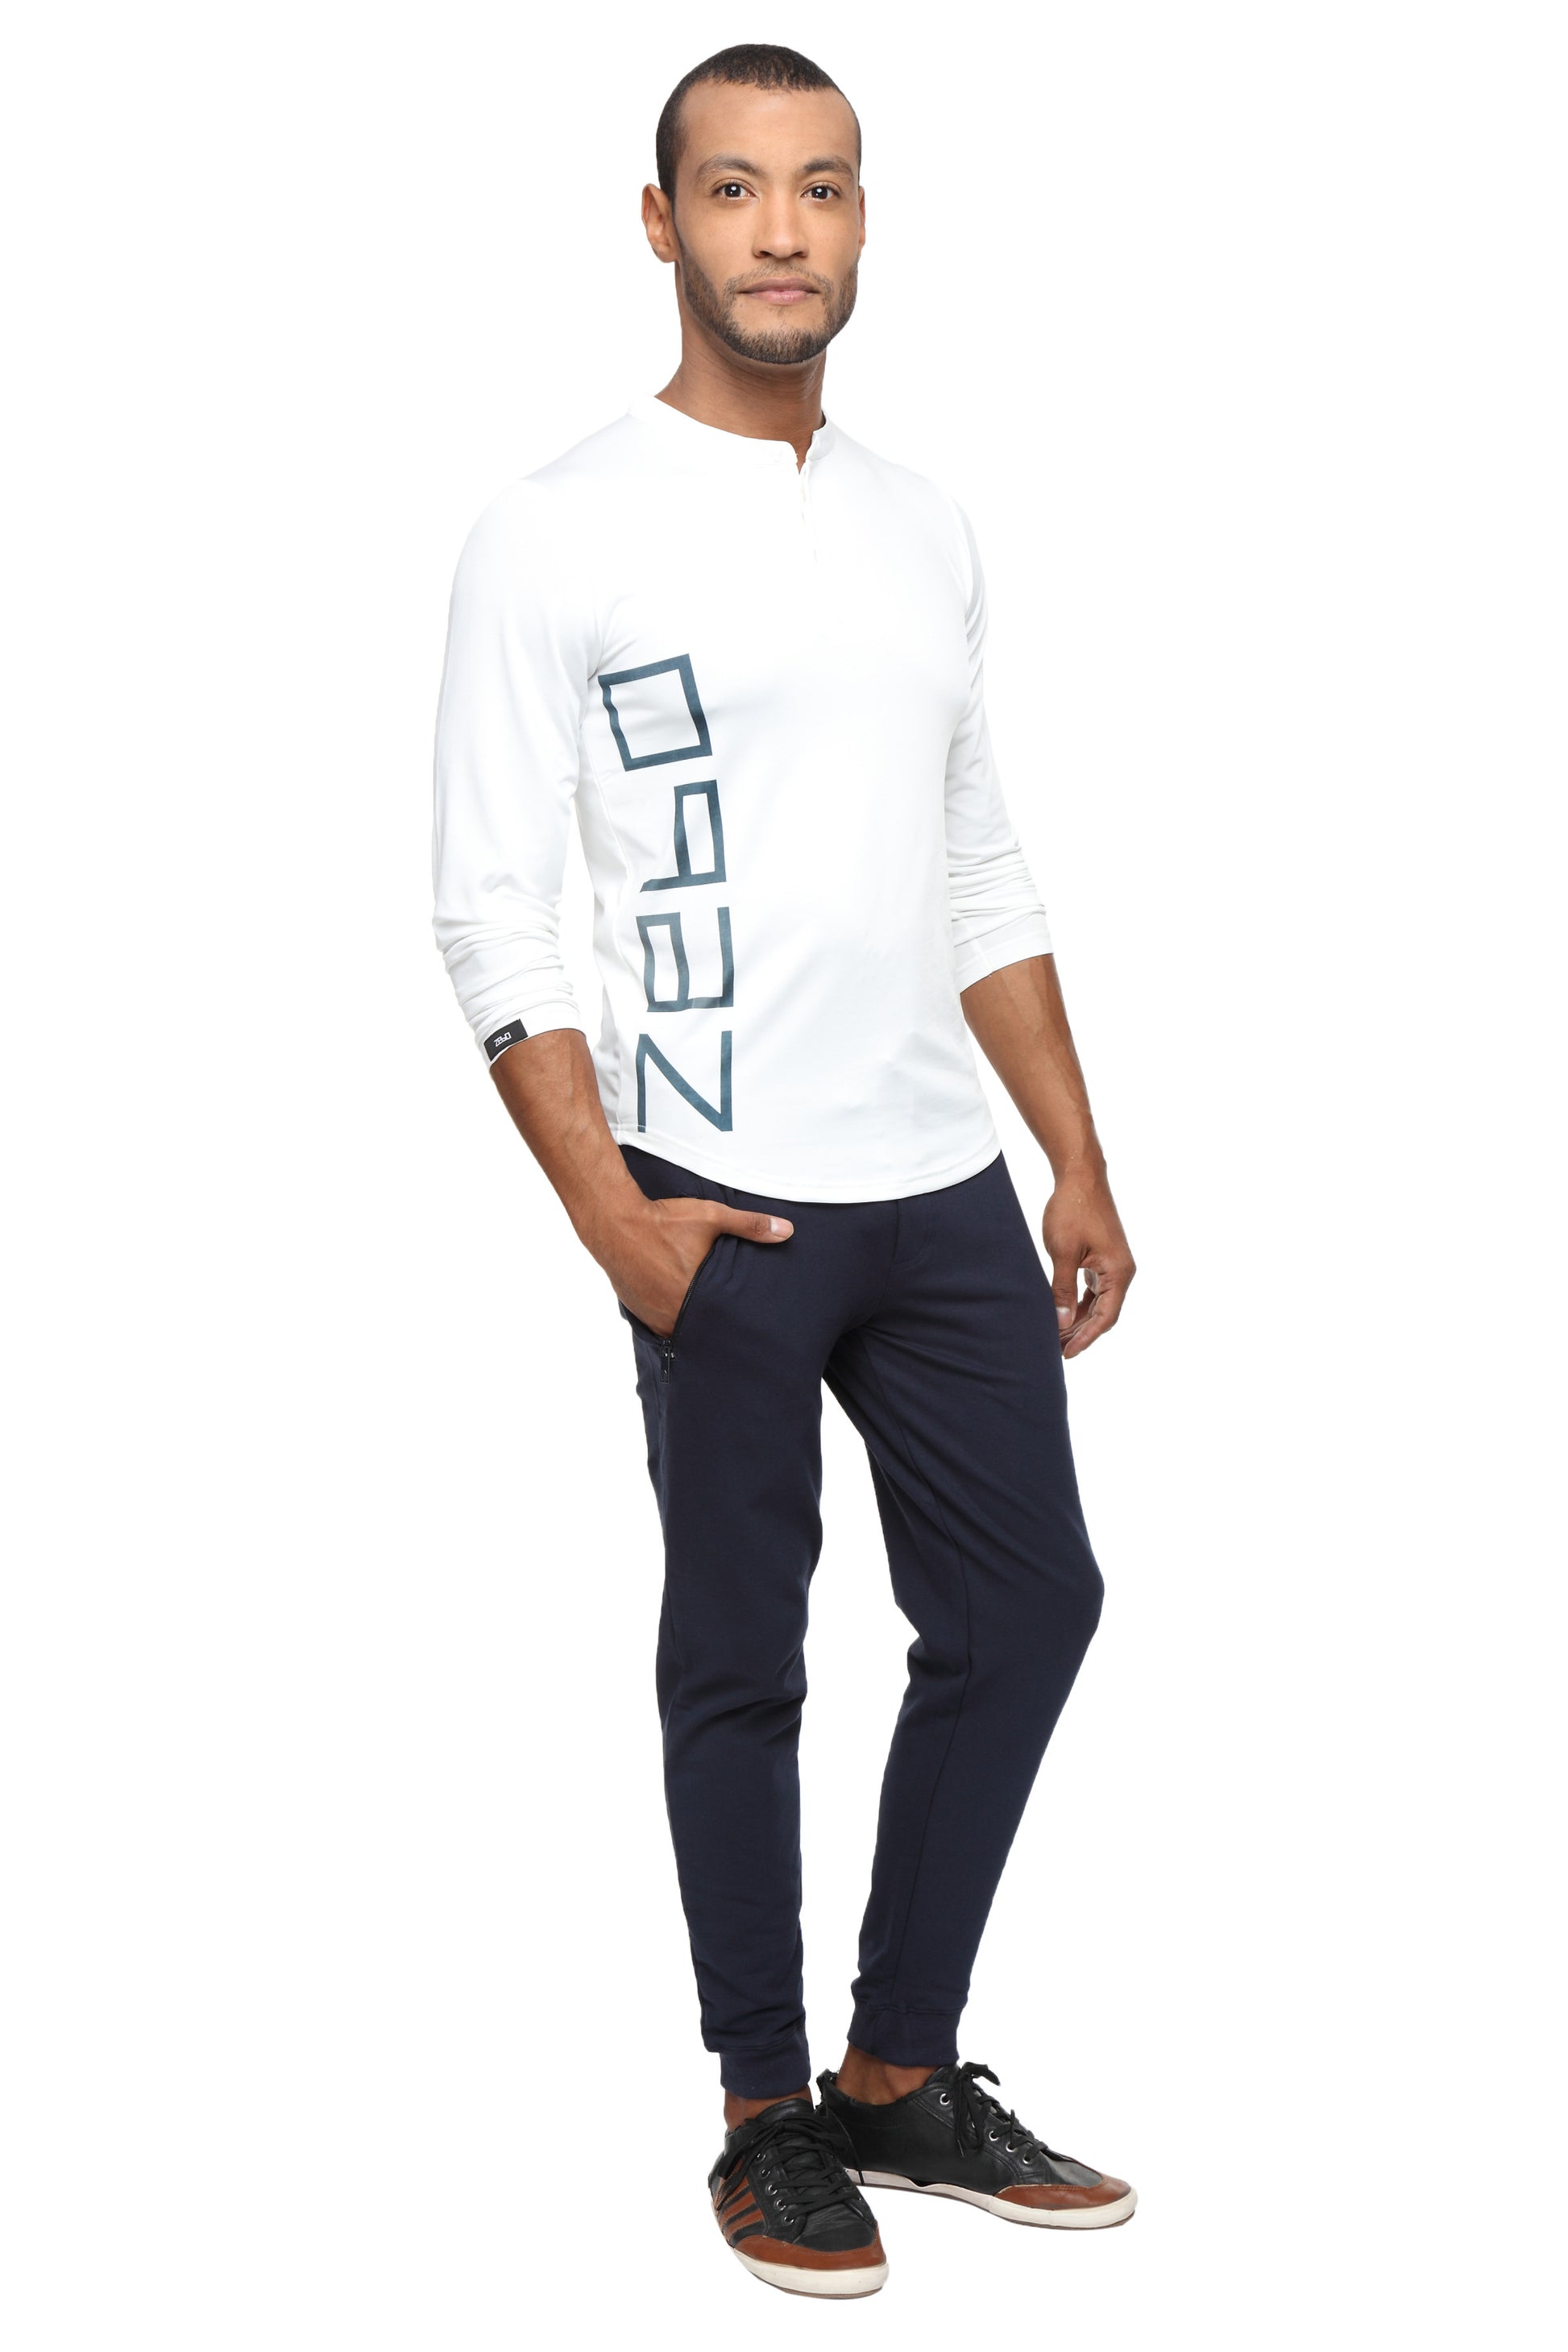 PERFORMA+ Blancos full sleeve Henley - Zebo Active Wear